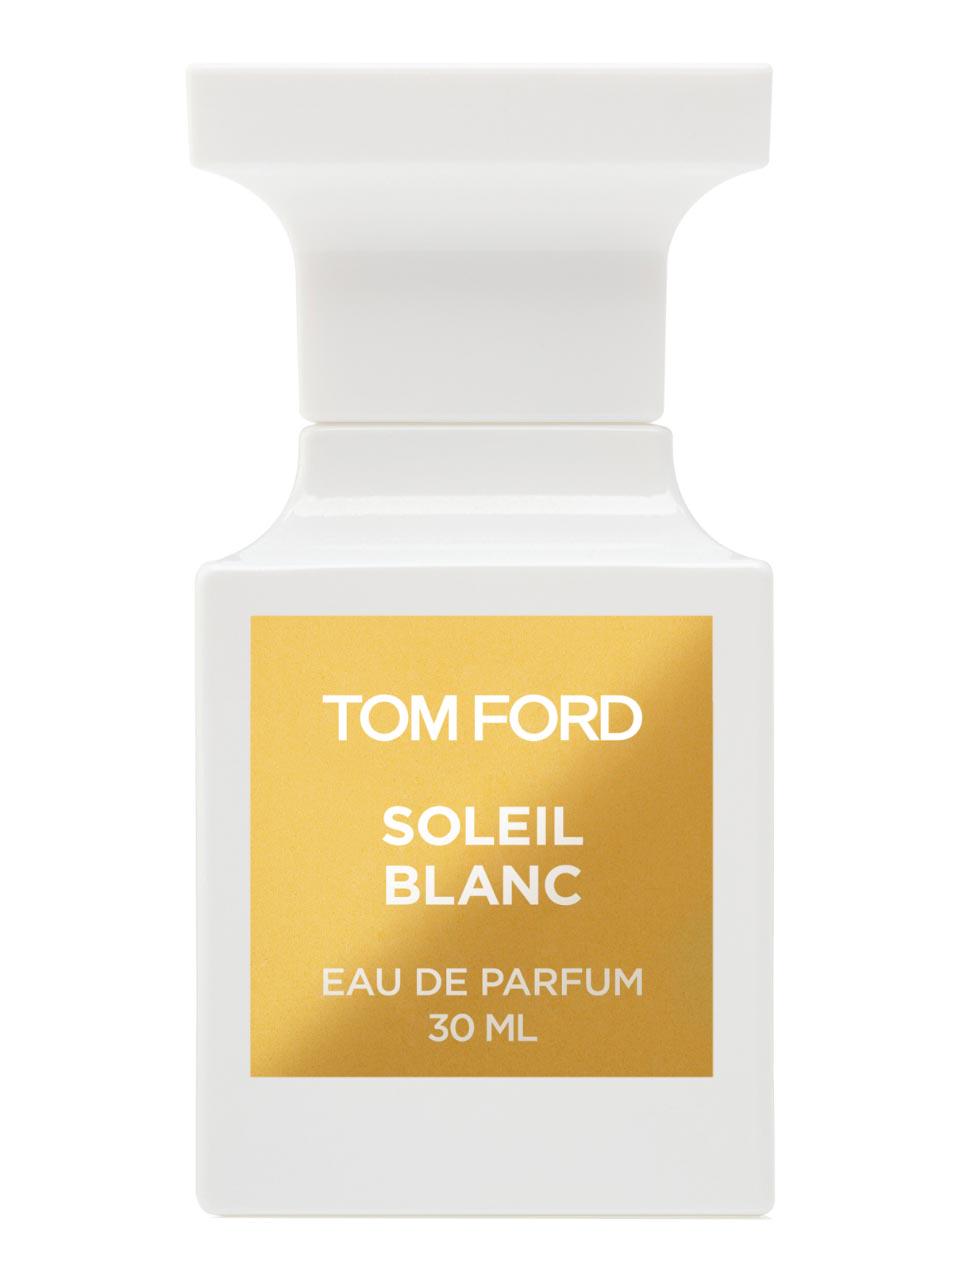 TOM FORD SOLEIL BRÛLANT EAU DE PARFUM SPRAY – A & R Perfumes